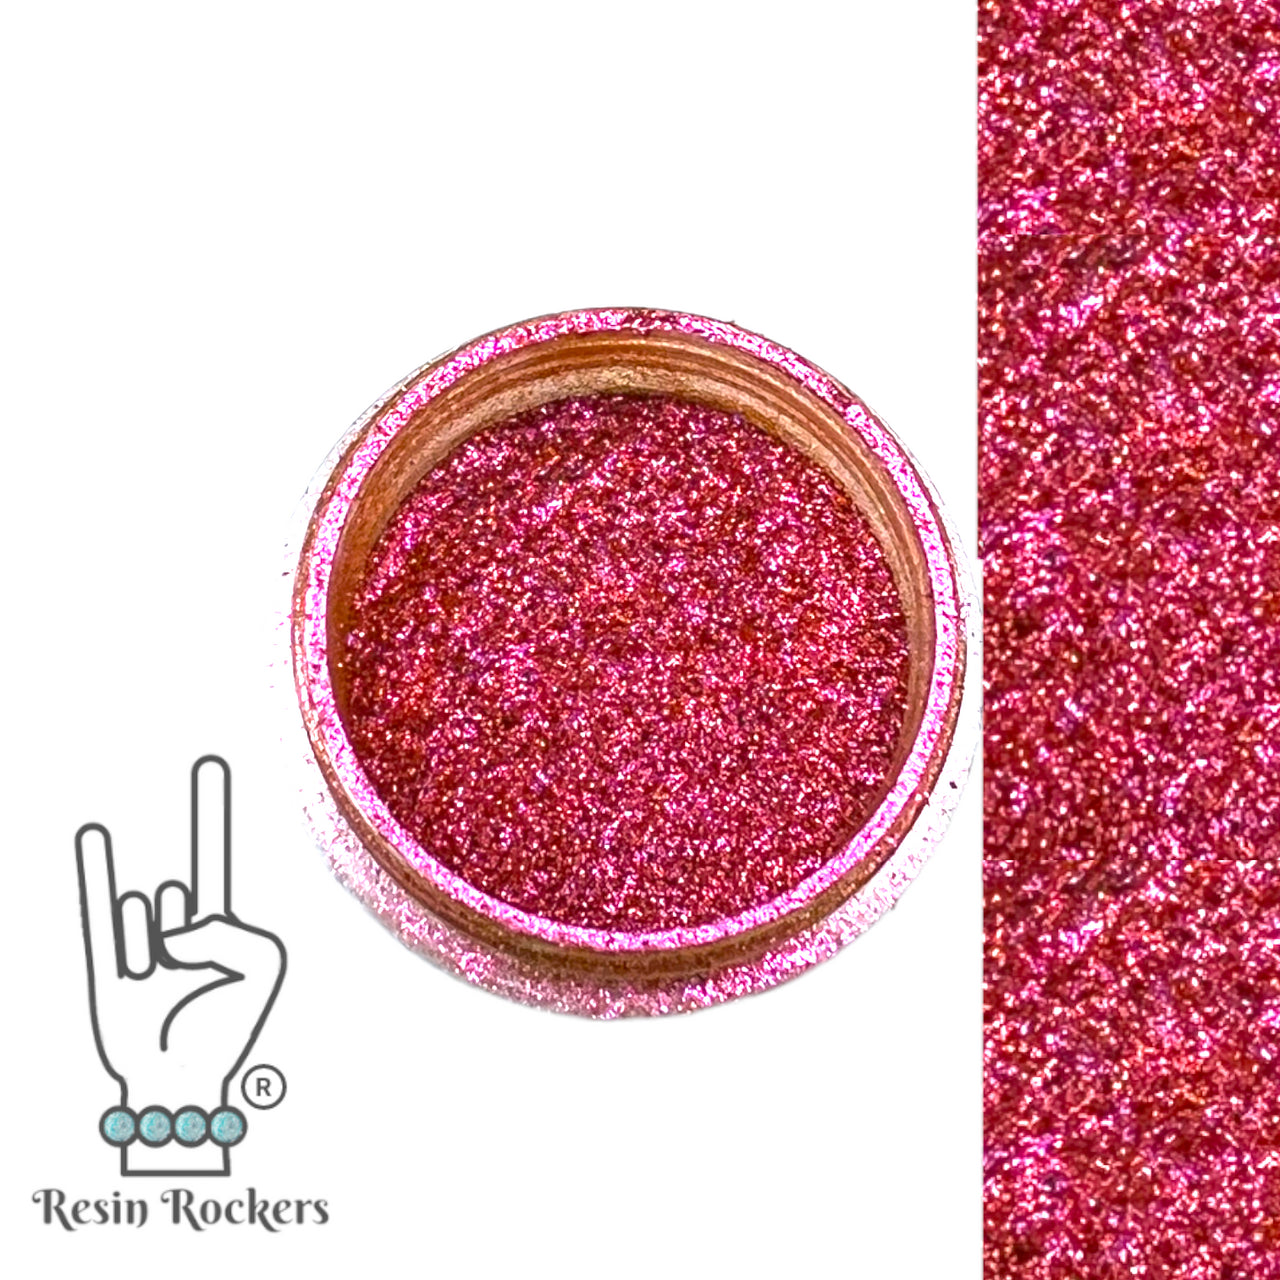 Resin Rockers Premium Color-shift Multi-chromatic Chameleon Pigment Powder Waterloo Sunset